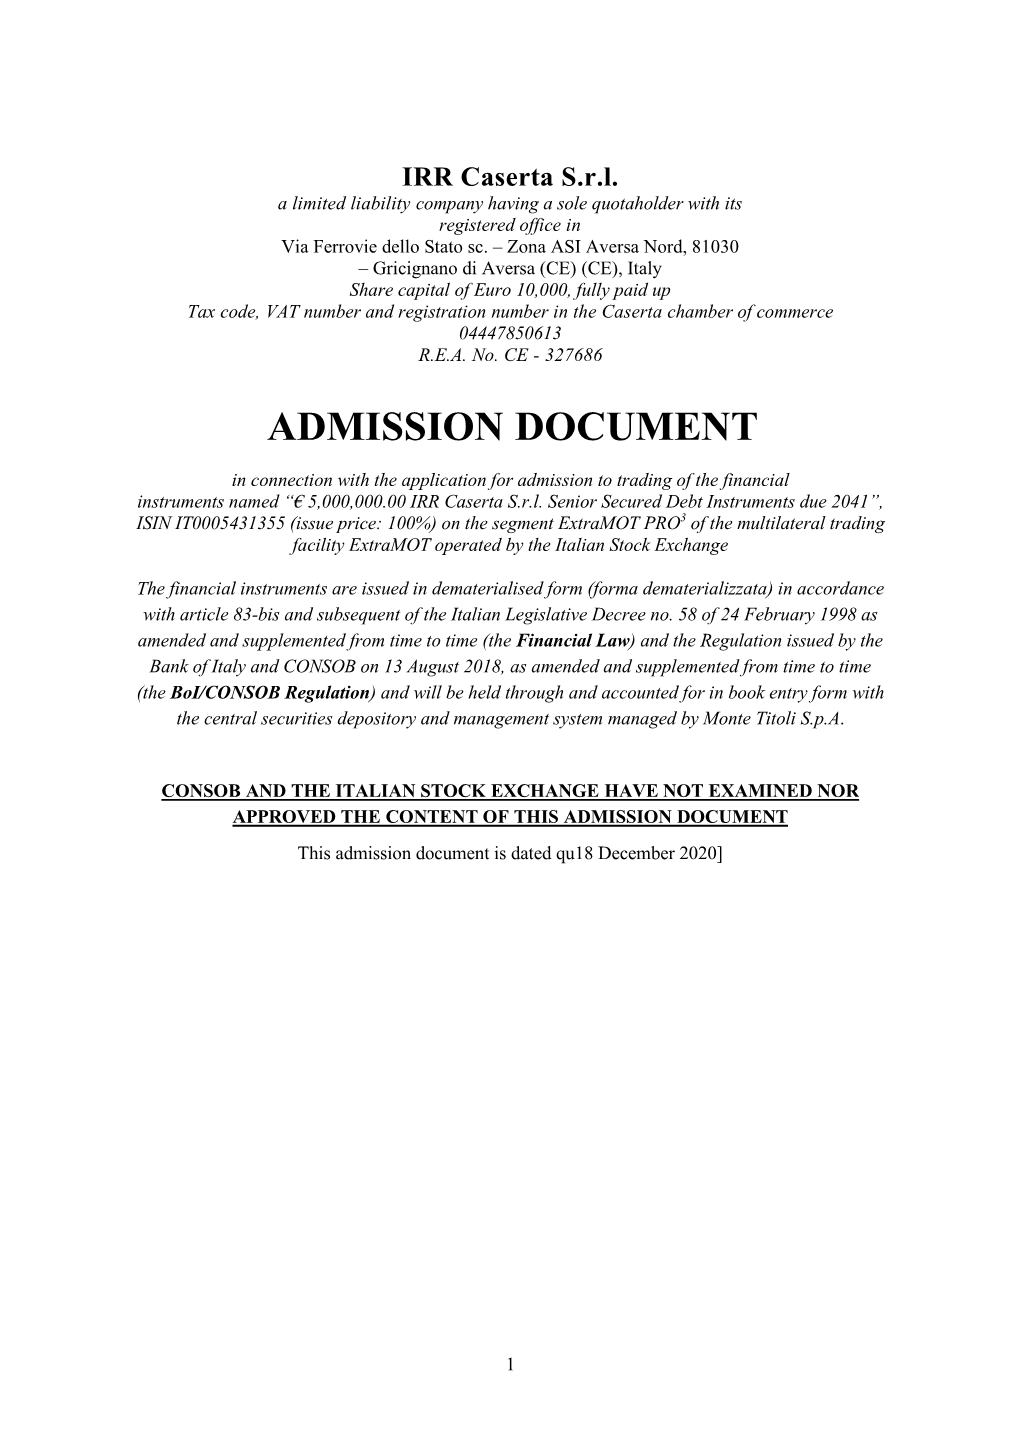 Admission Document